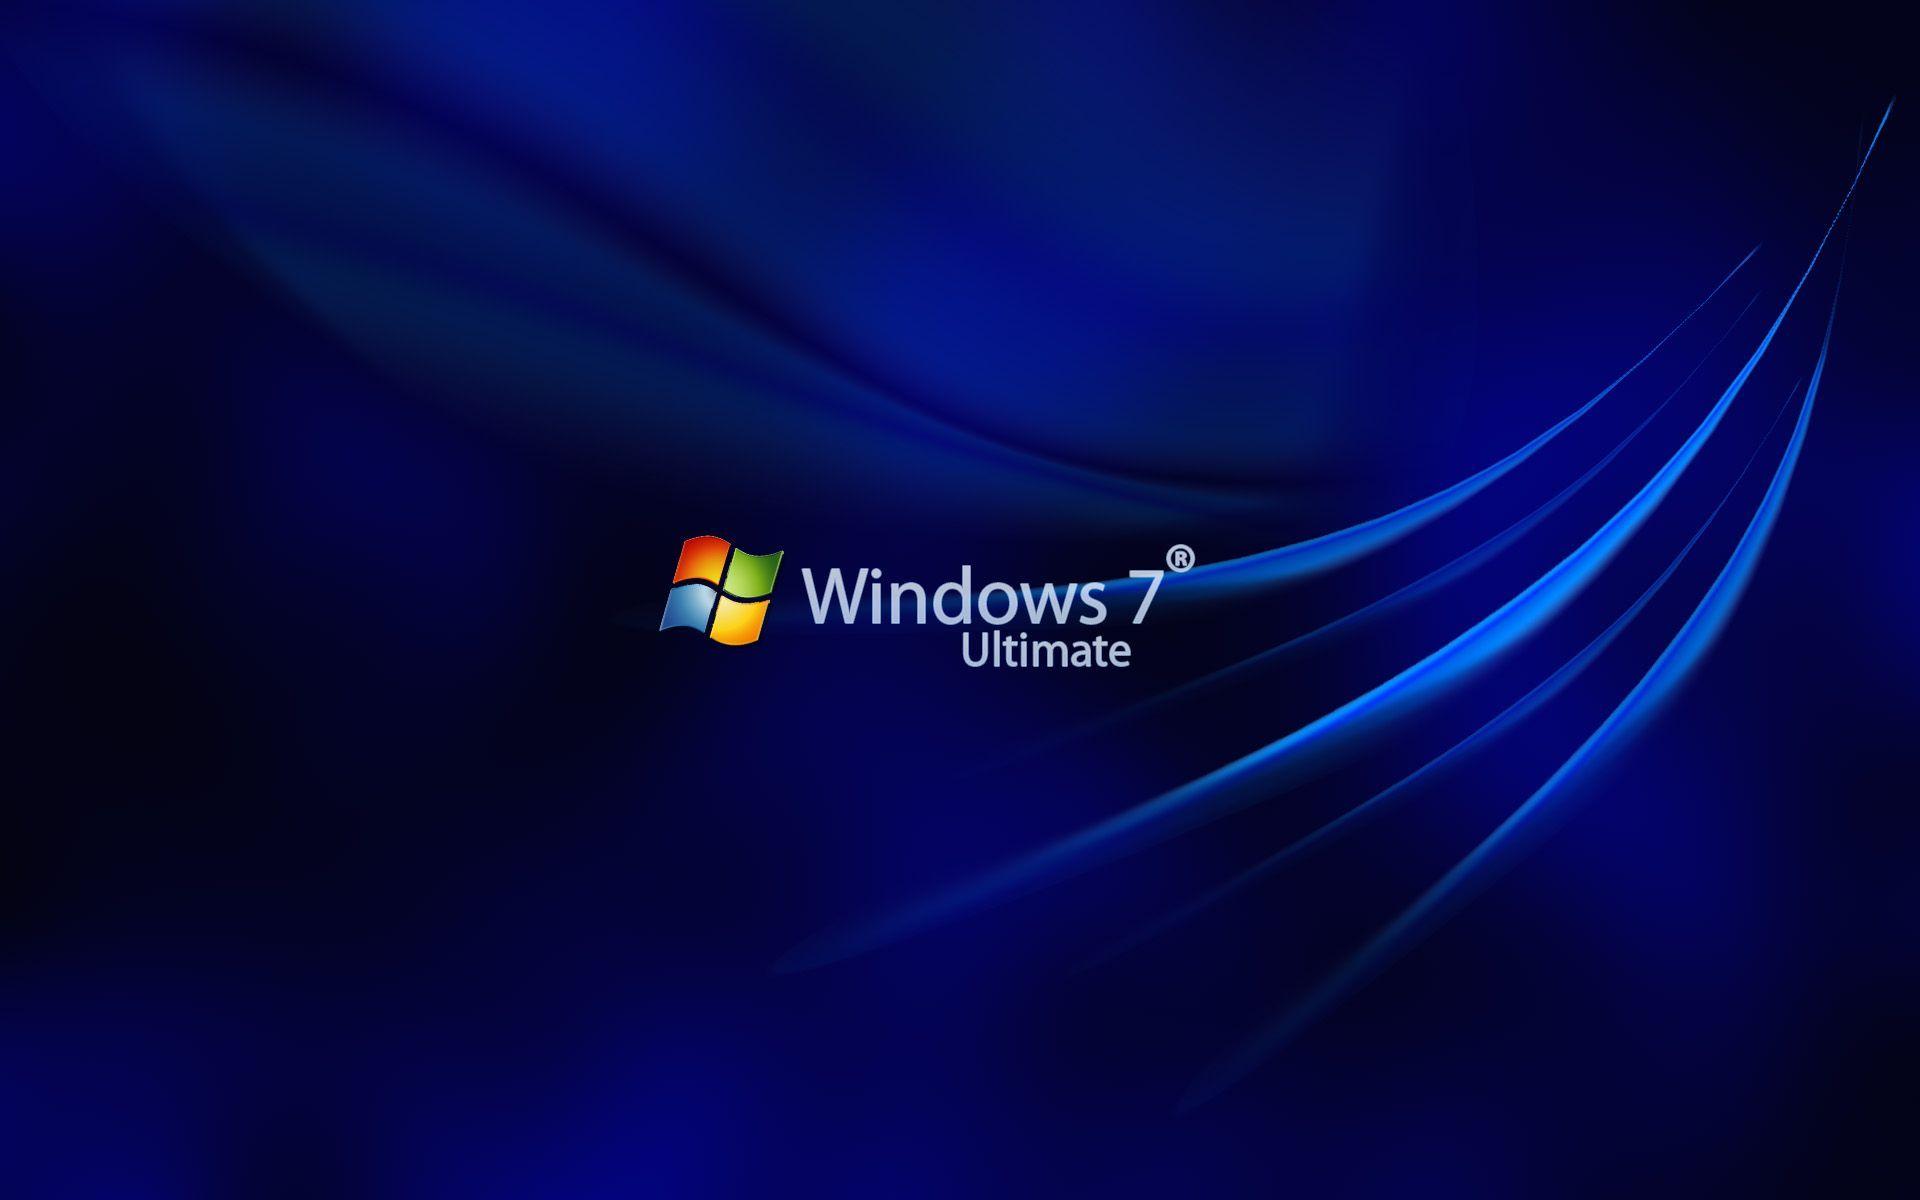 Windows 7 Ultimate Wallpapers - Wallpaper Cave